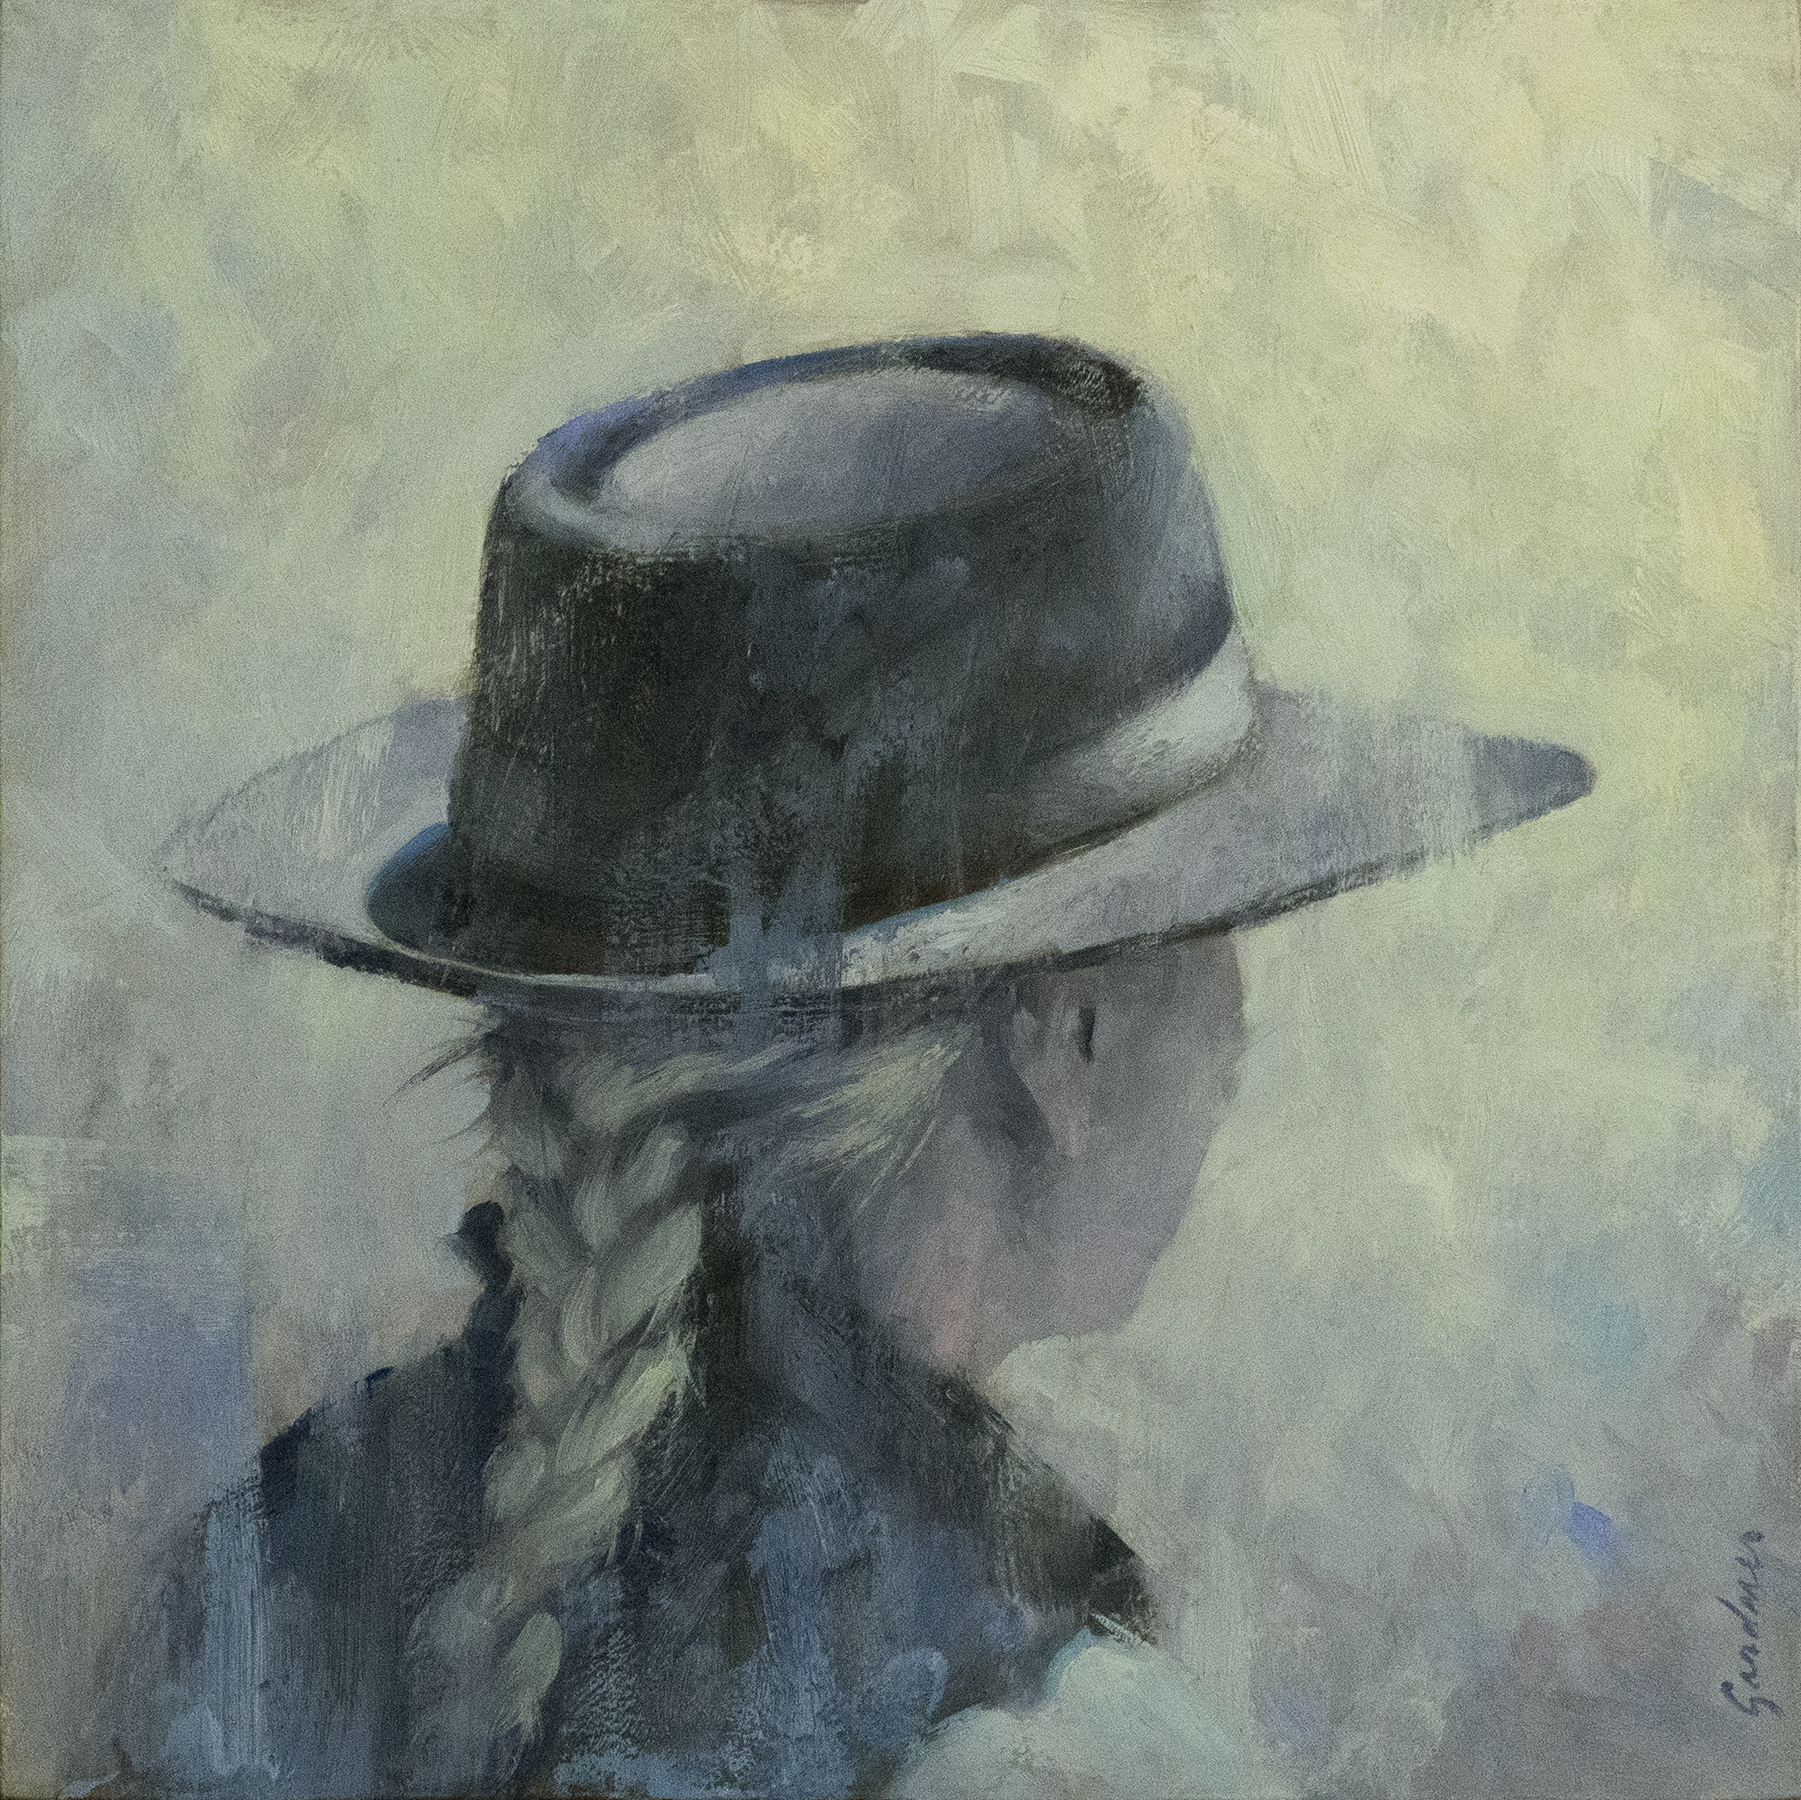 Terry Gardner - The Black Hat